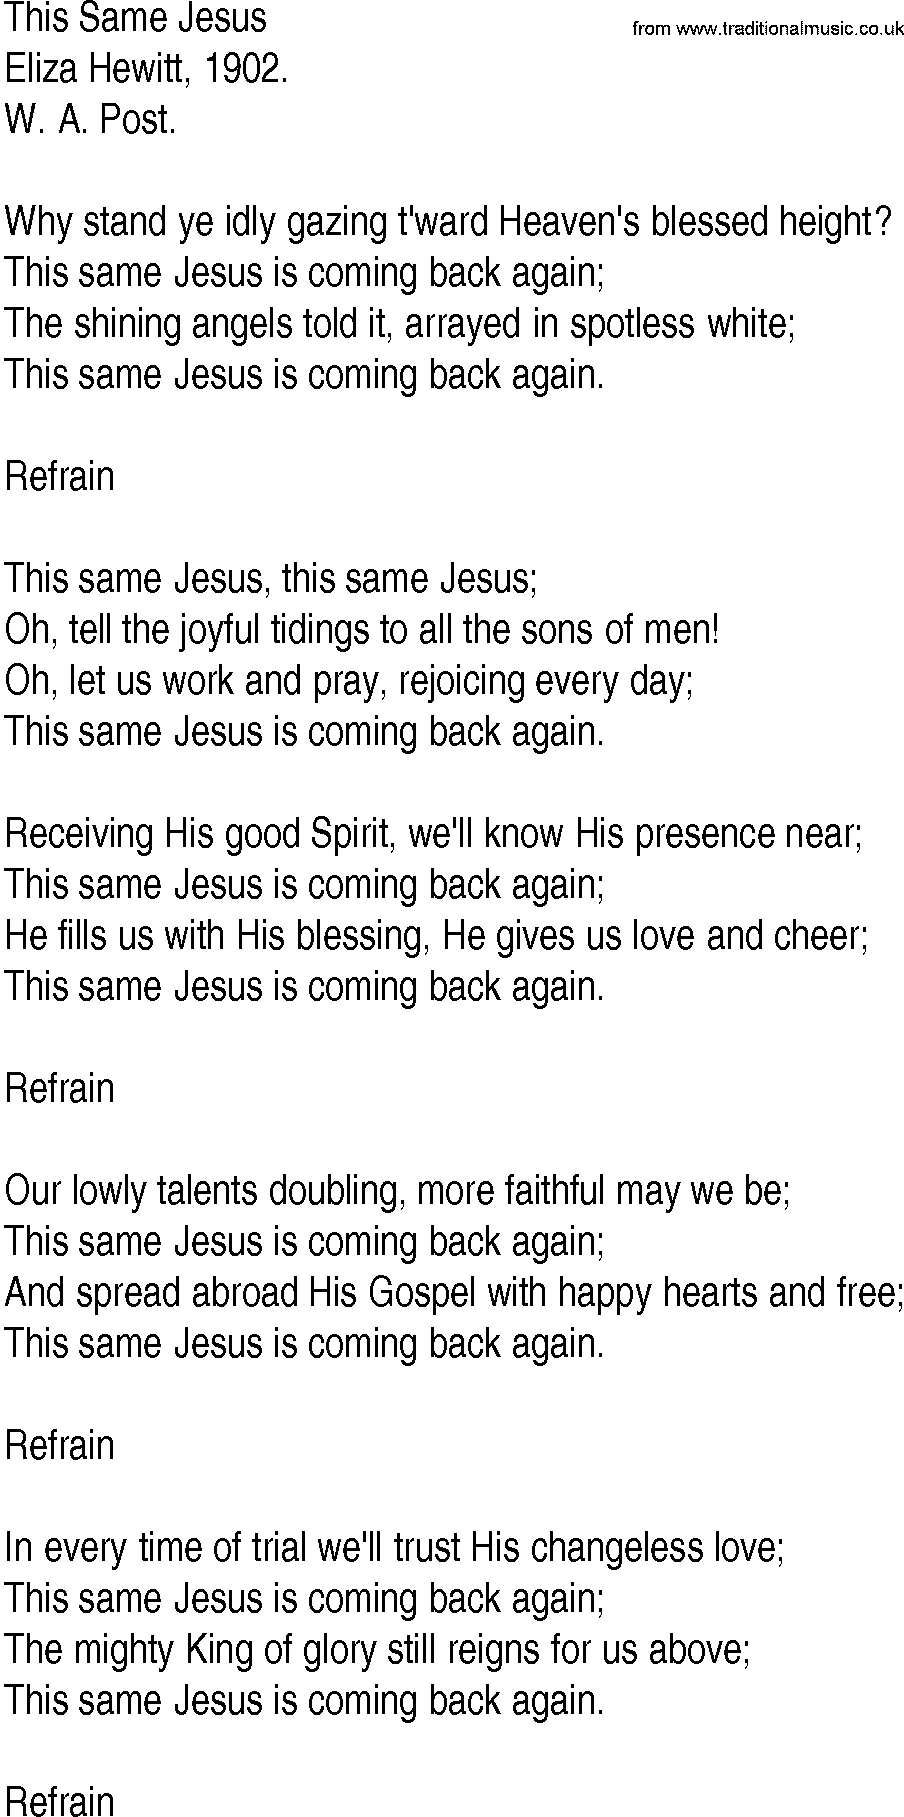 Hymn and Gospel Song: This Same Jesus by Eliza Hewitt lyrics